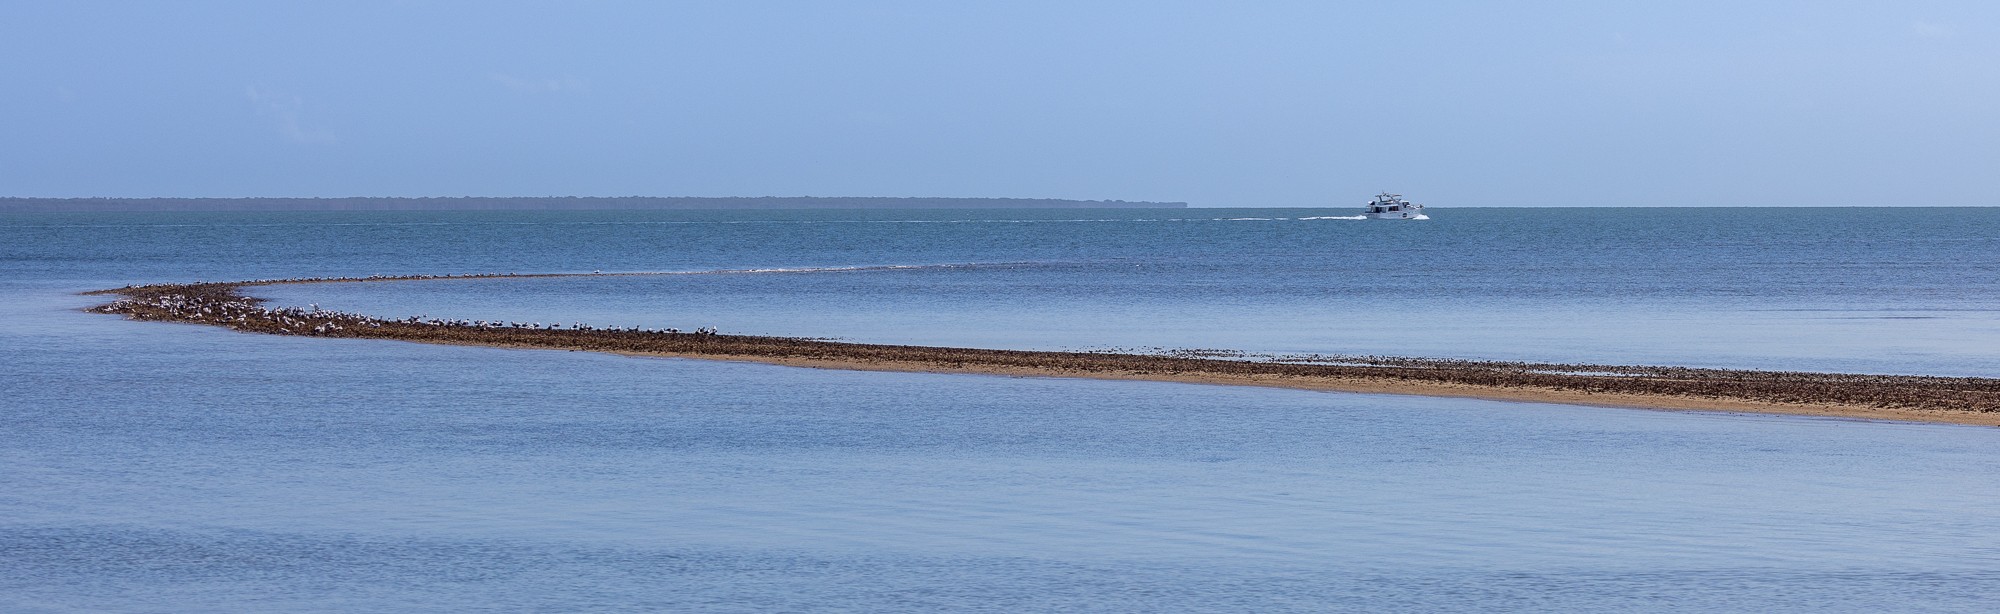 Reef Point, Shorncliffe, Moreton Bay